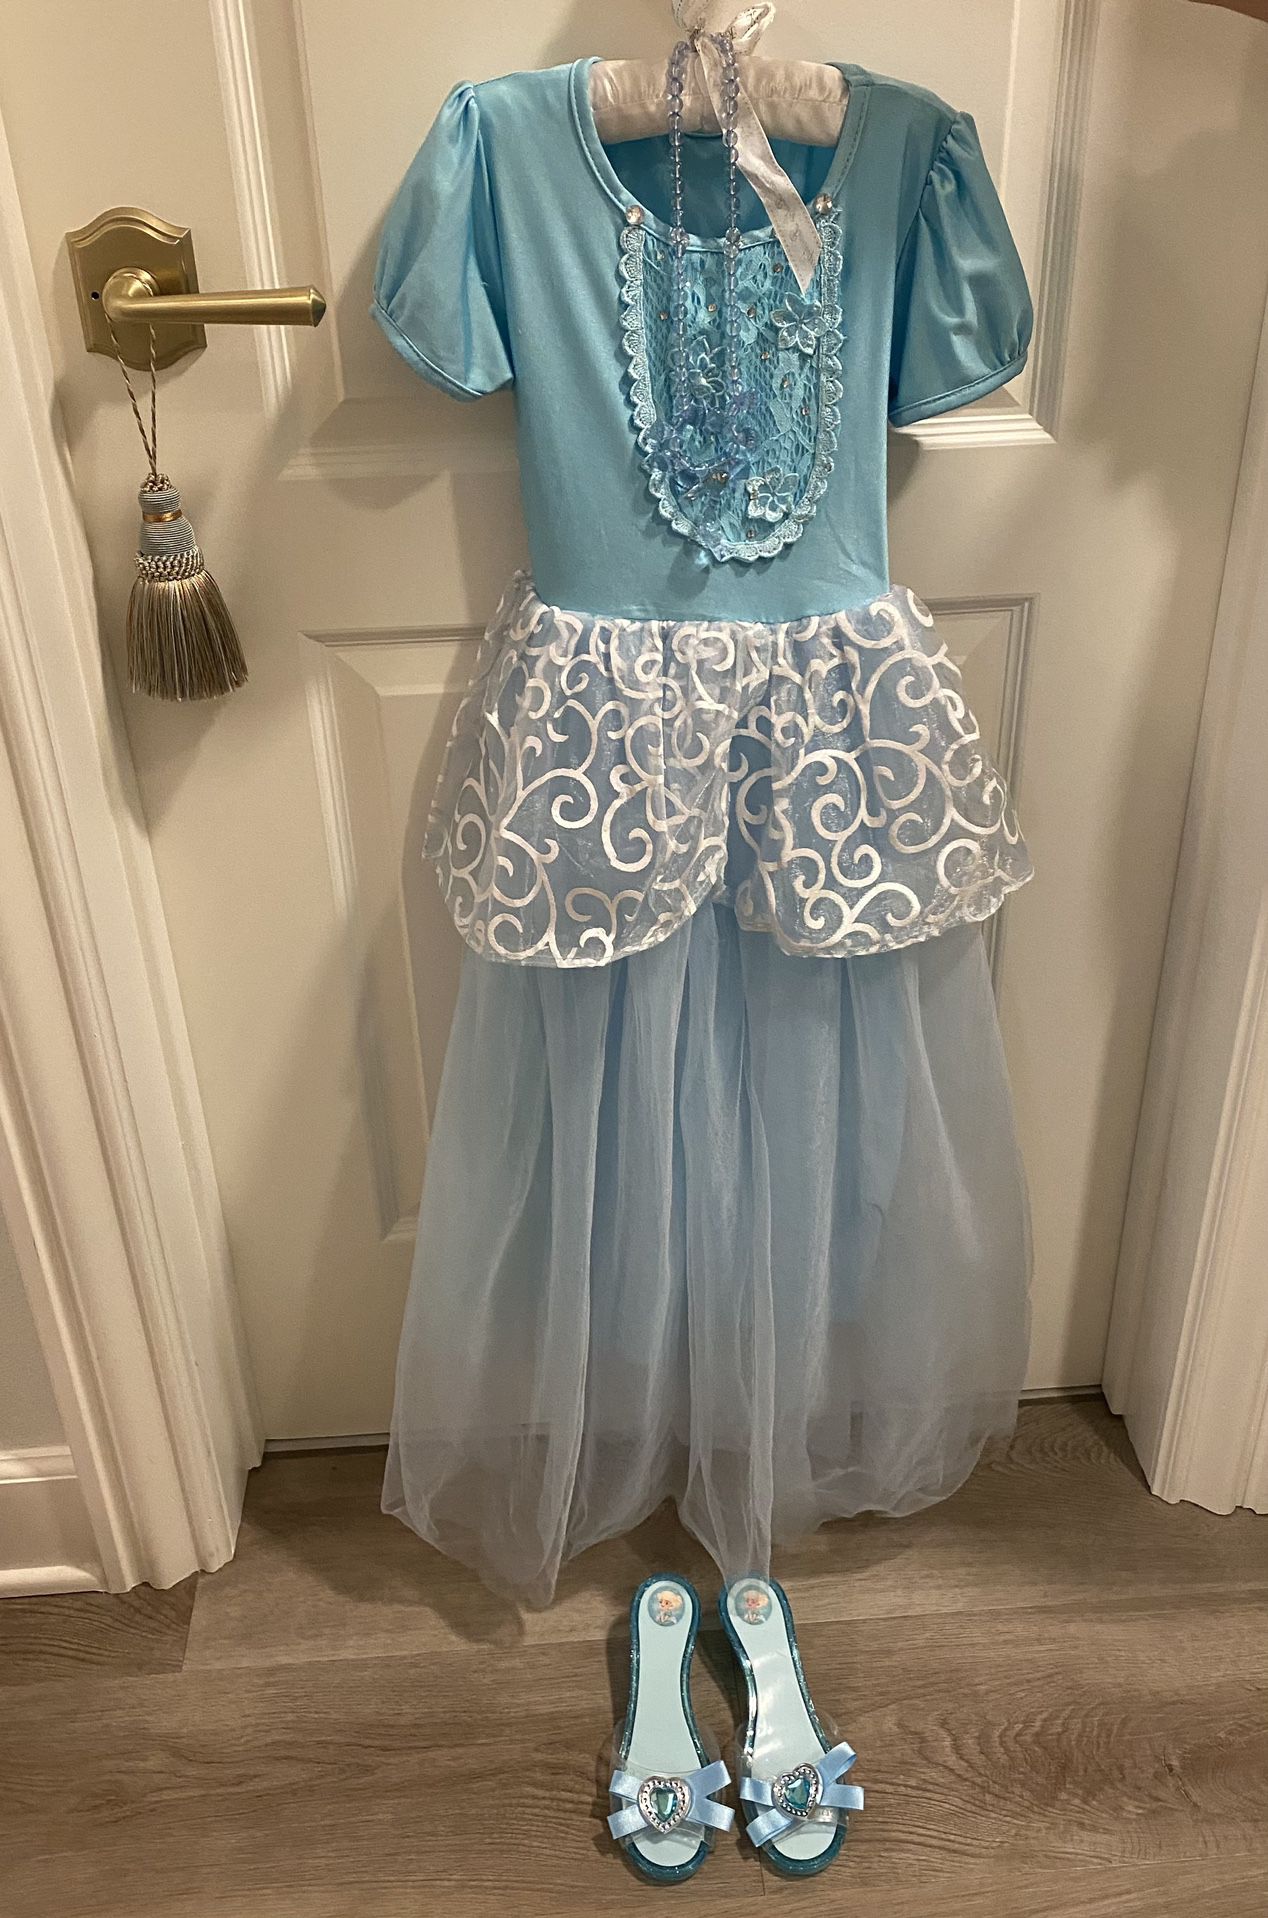 Elsa Princess Dress for Girls Kids Frozen Elsa Costume  4 Piece Outfit 3-10yrs